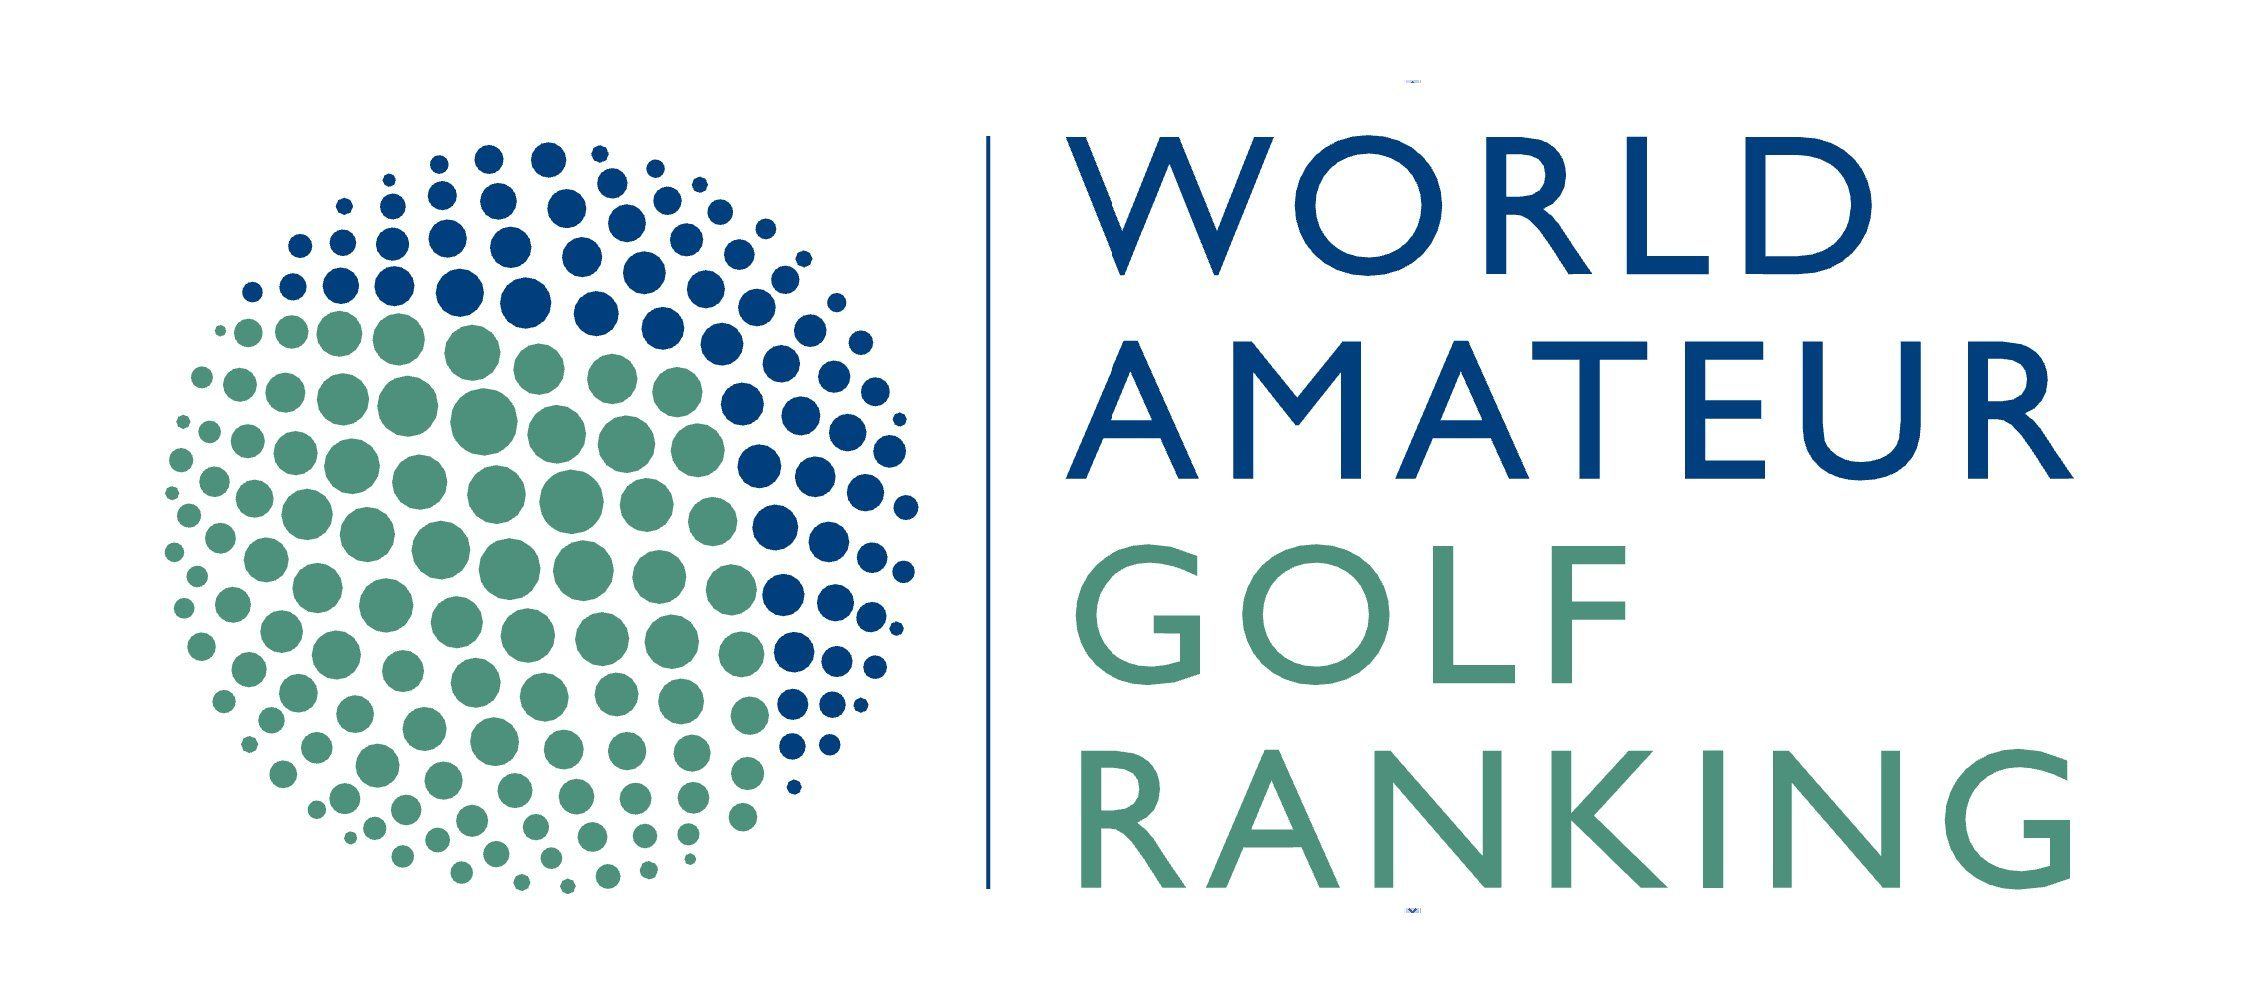 best of Golf World rankings amateur